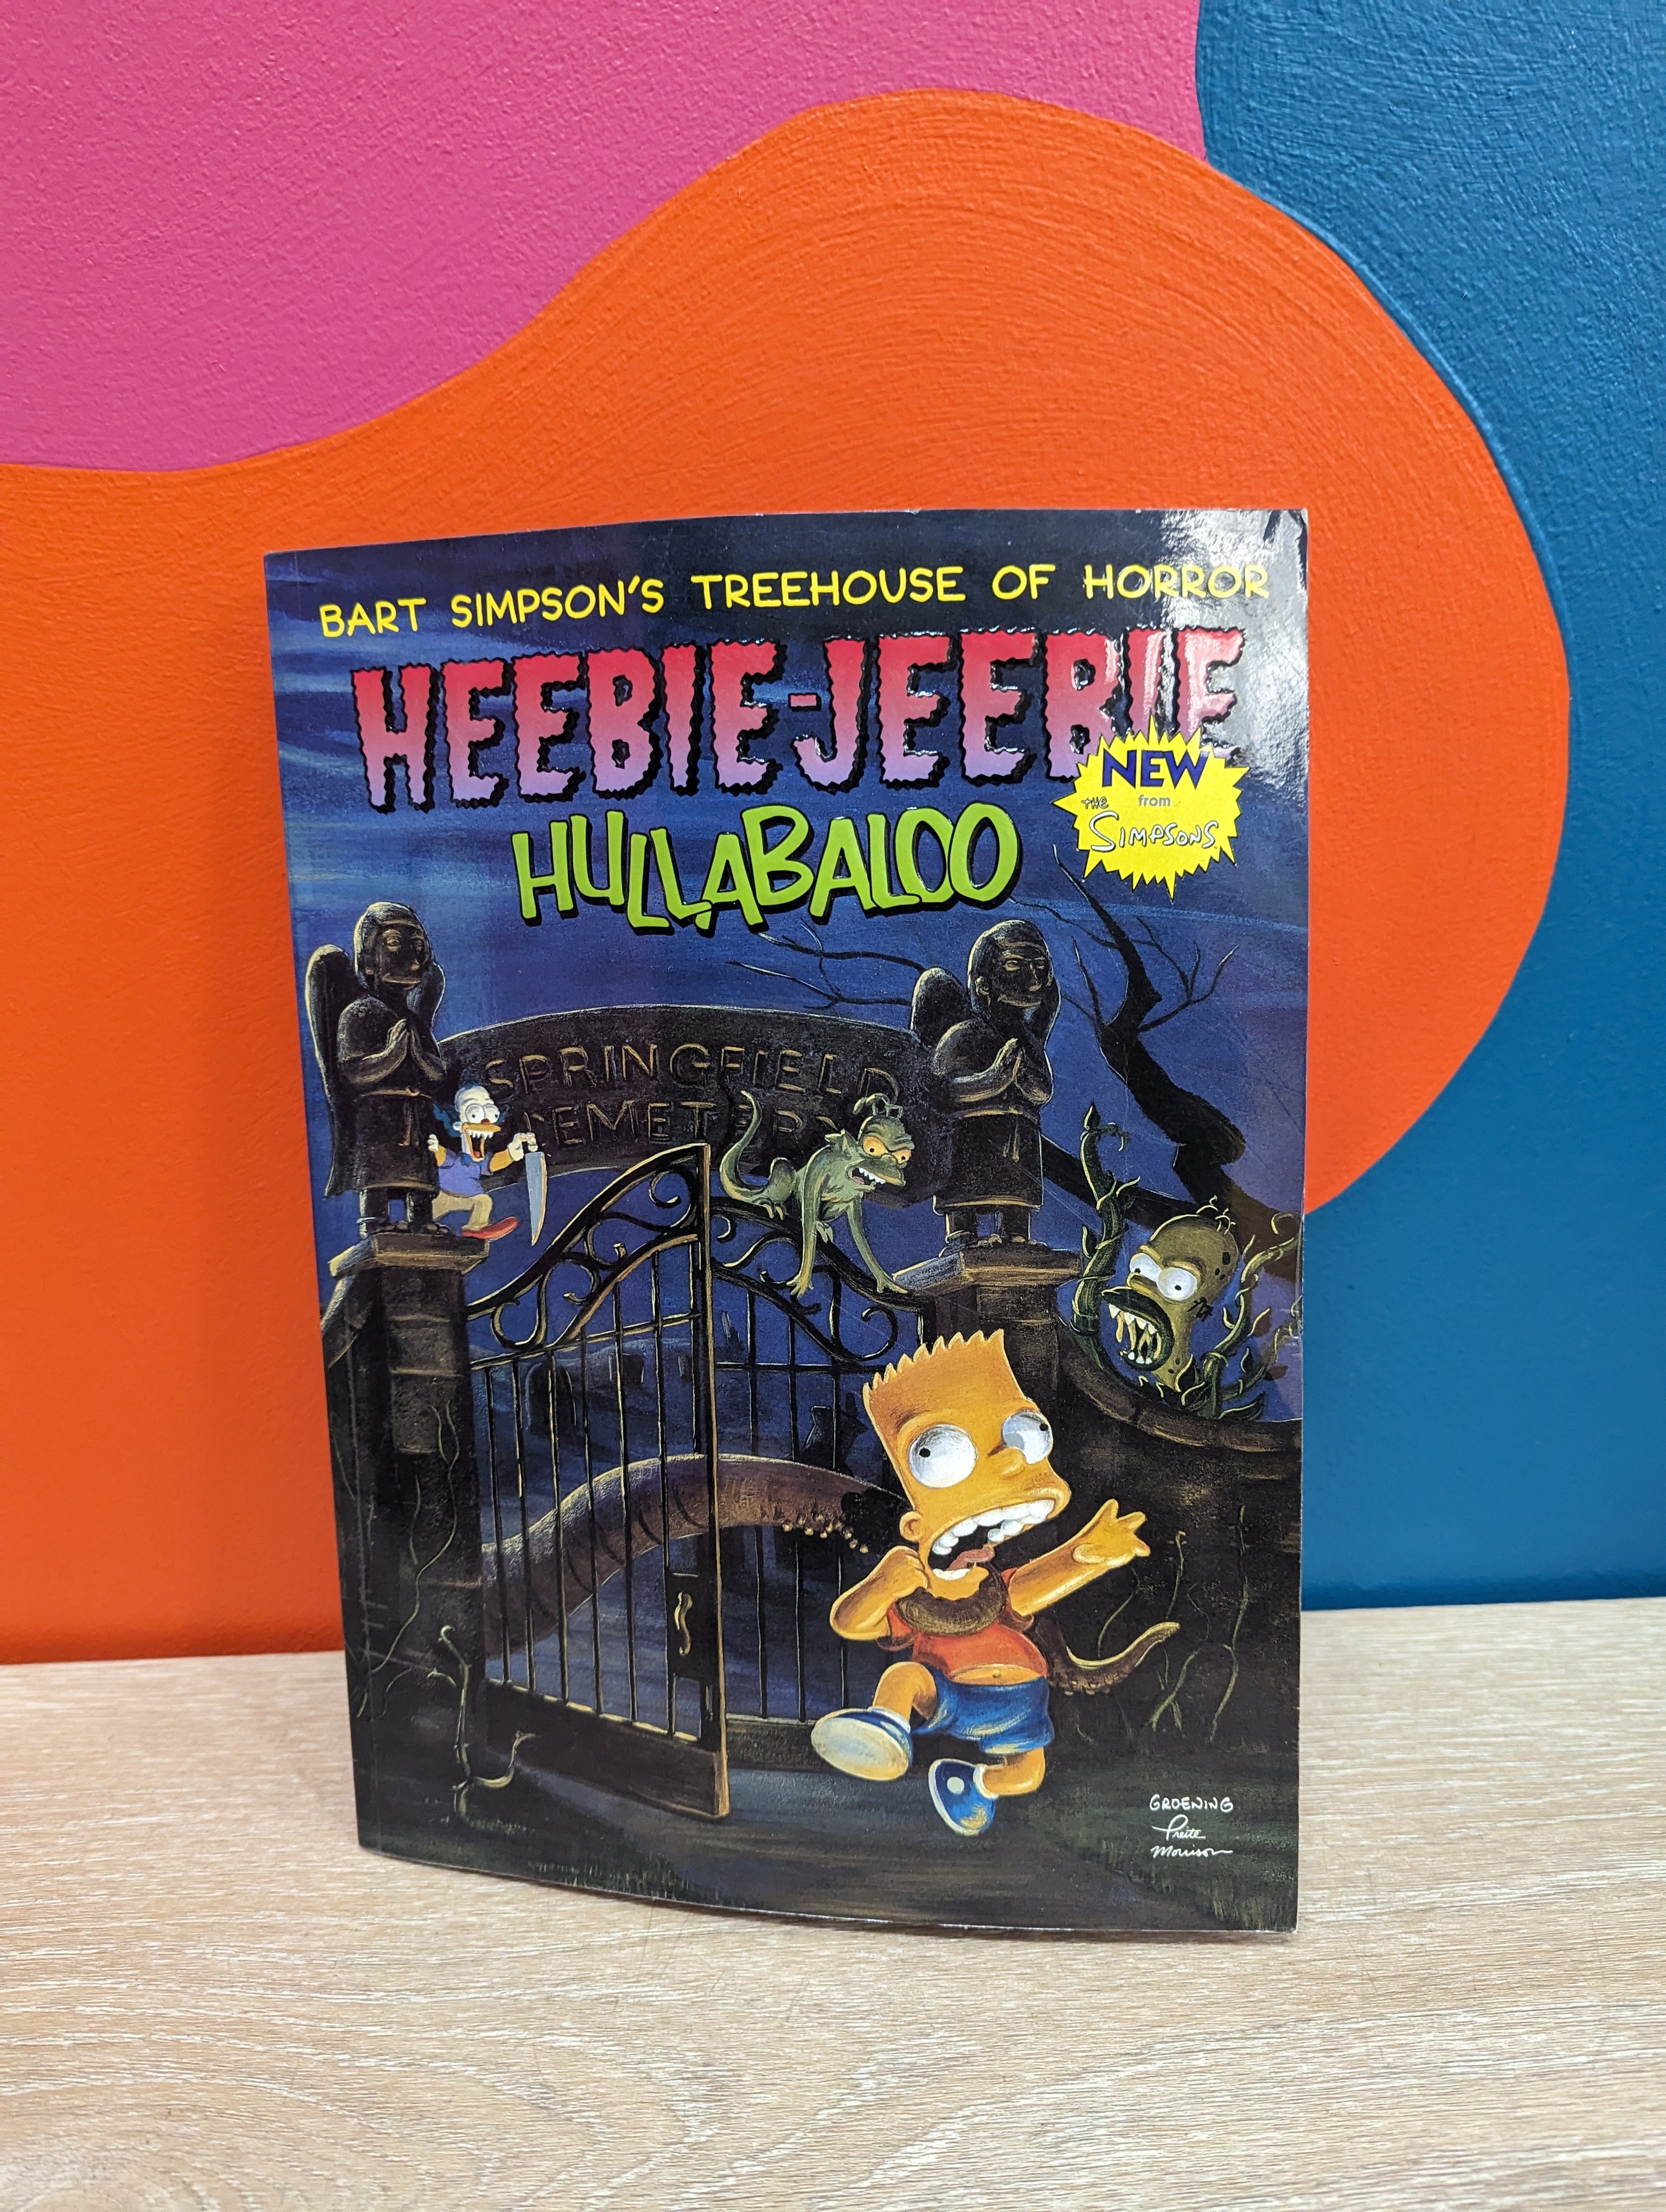 Bart Simpson's Treehouse Of Horror Heebie-jeebie Hullabaloo